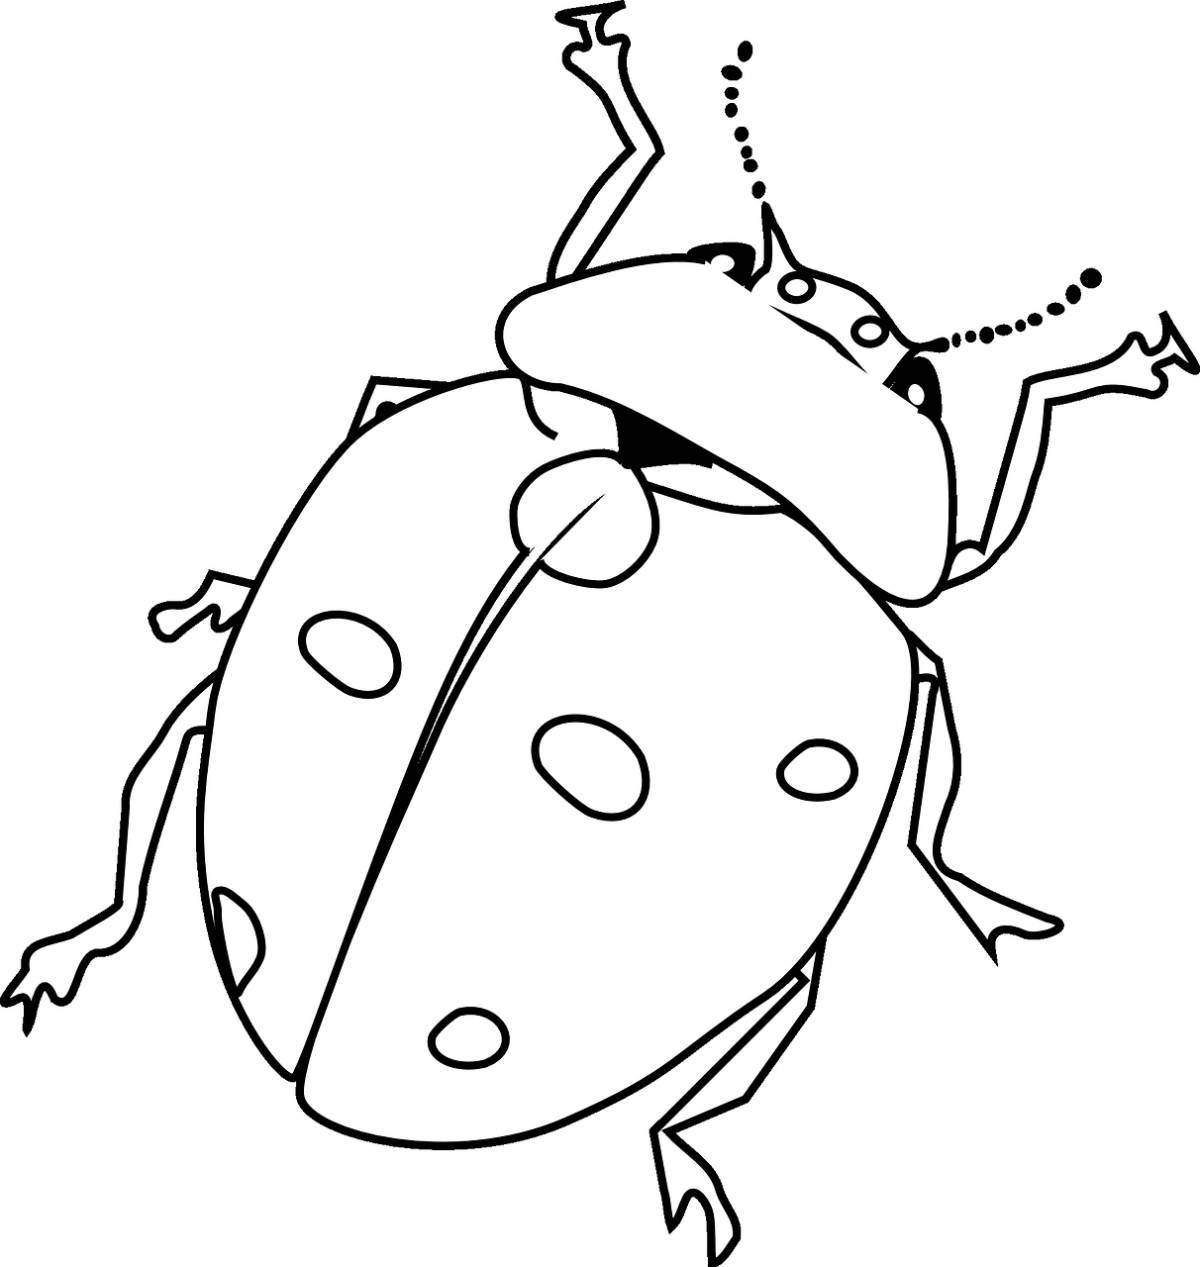 Coloring book joyful beetles